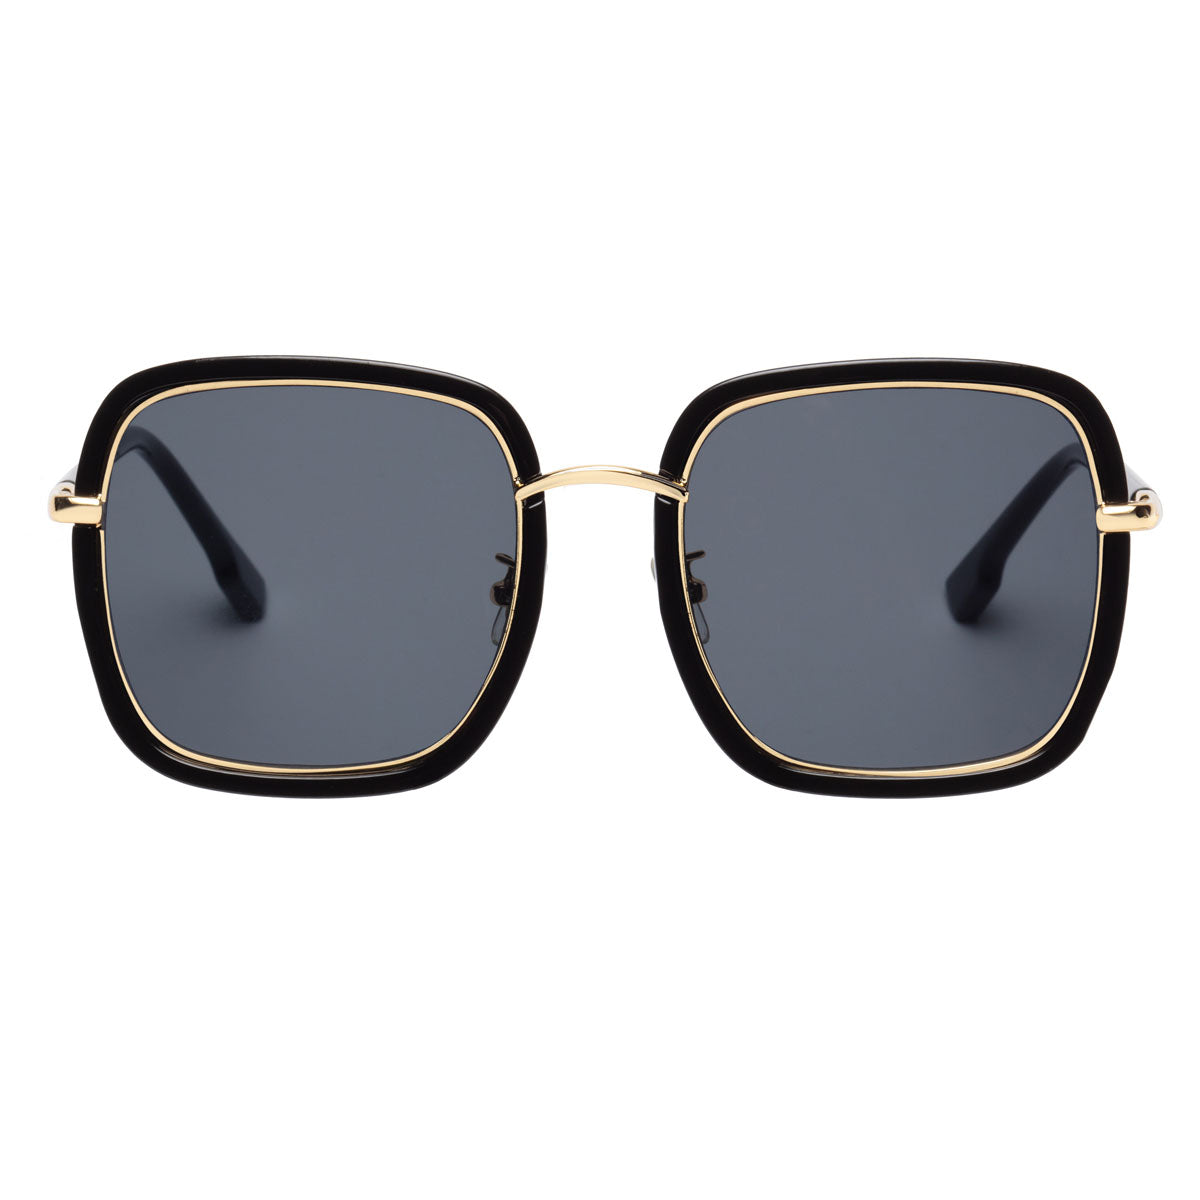 Sunglasses - EBS7016 Positano